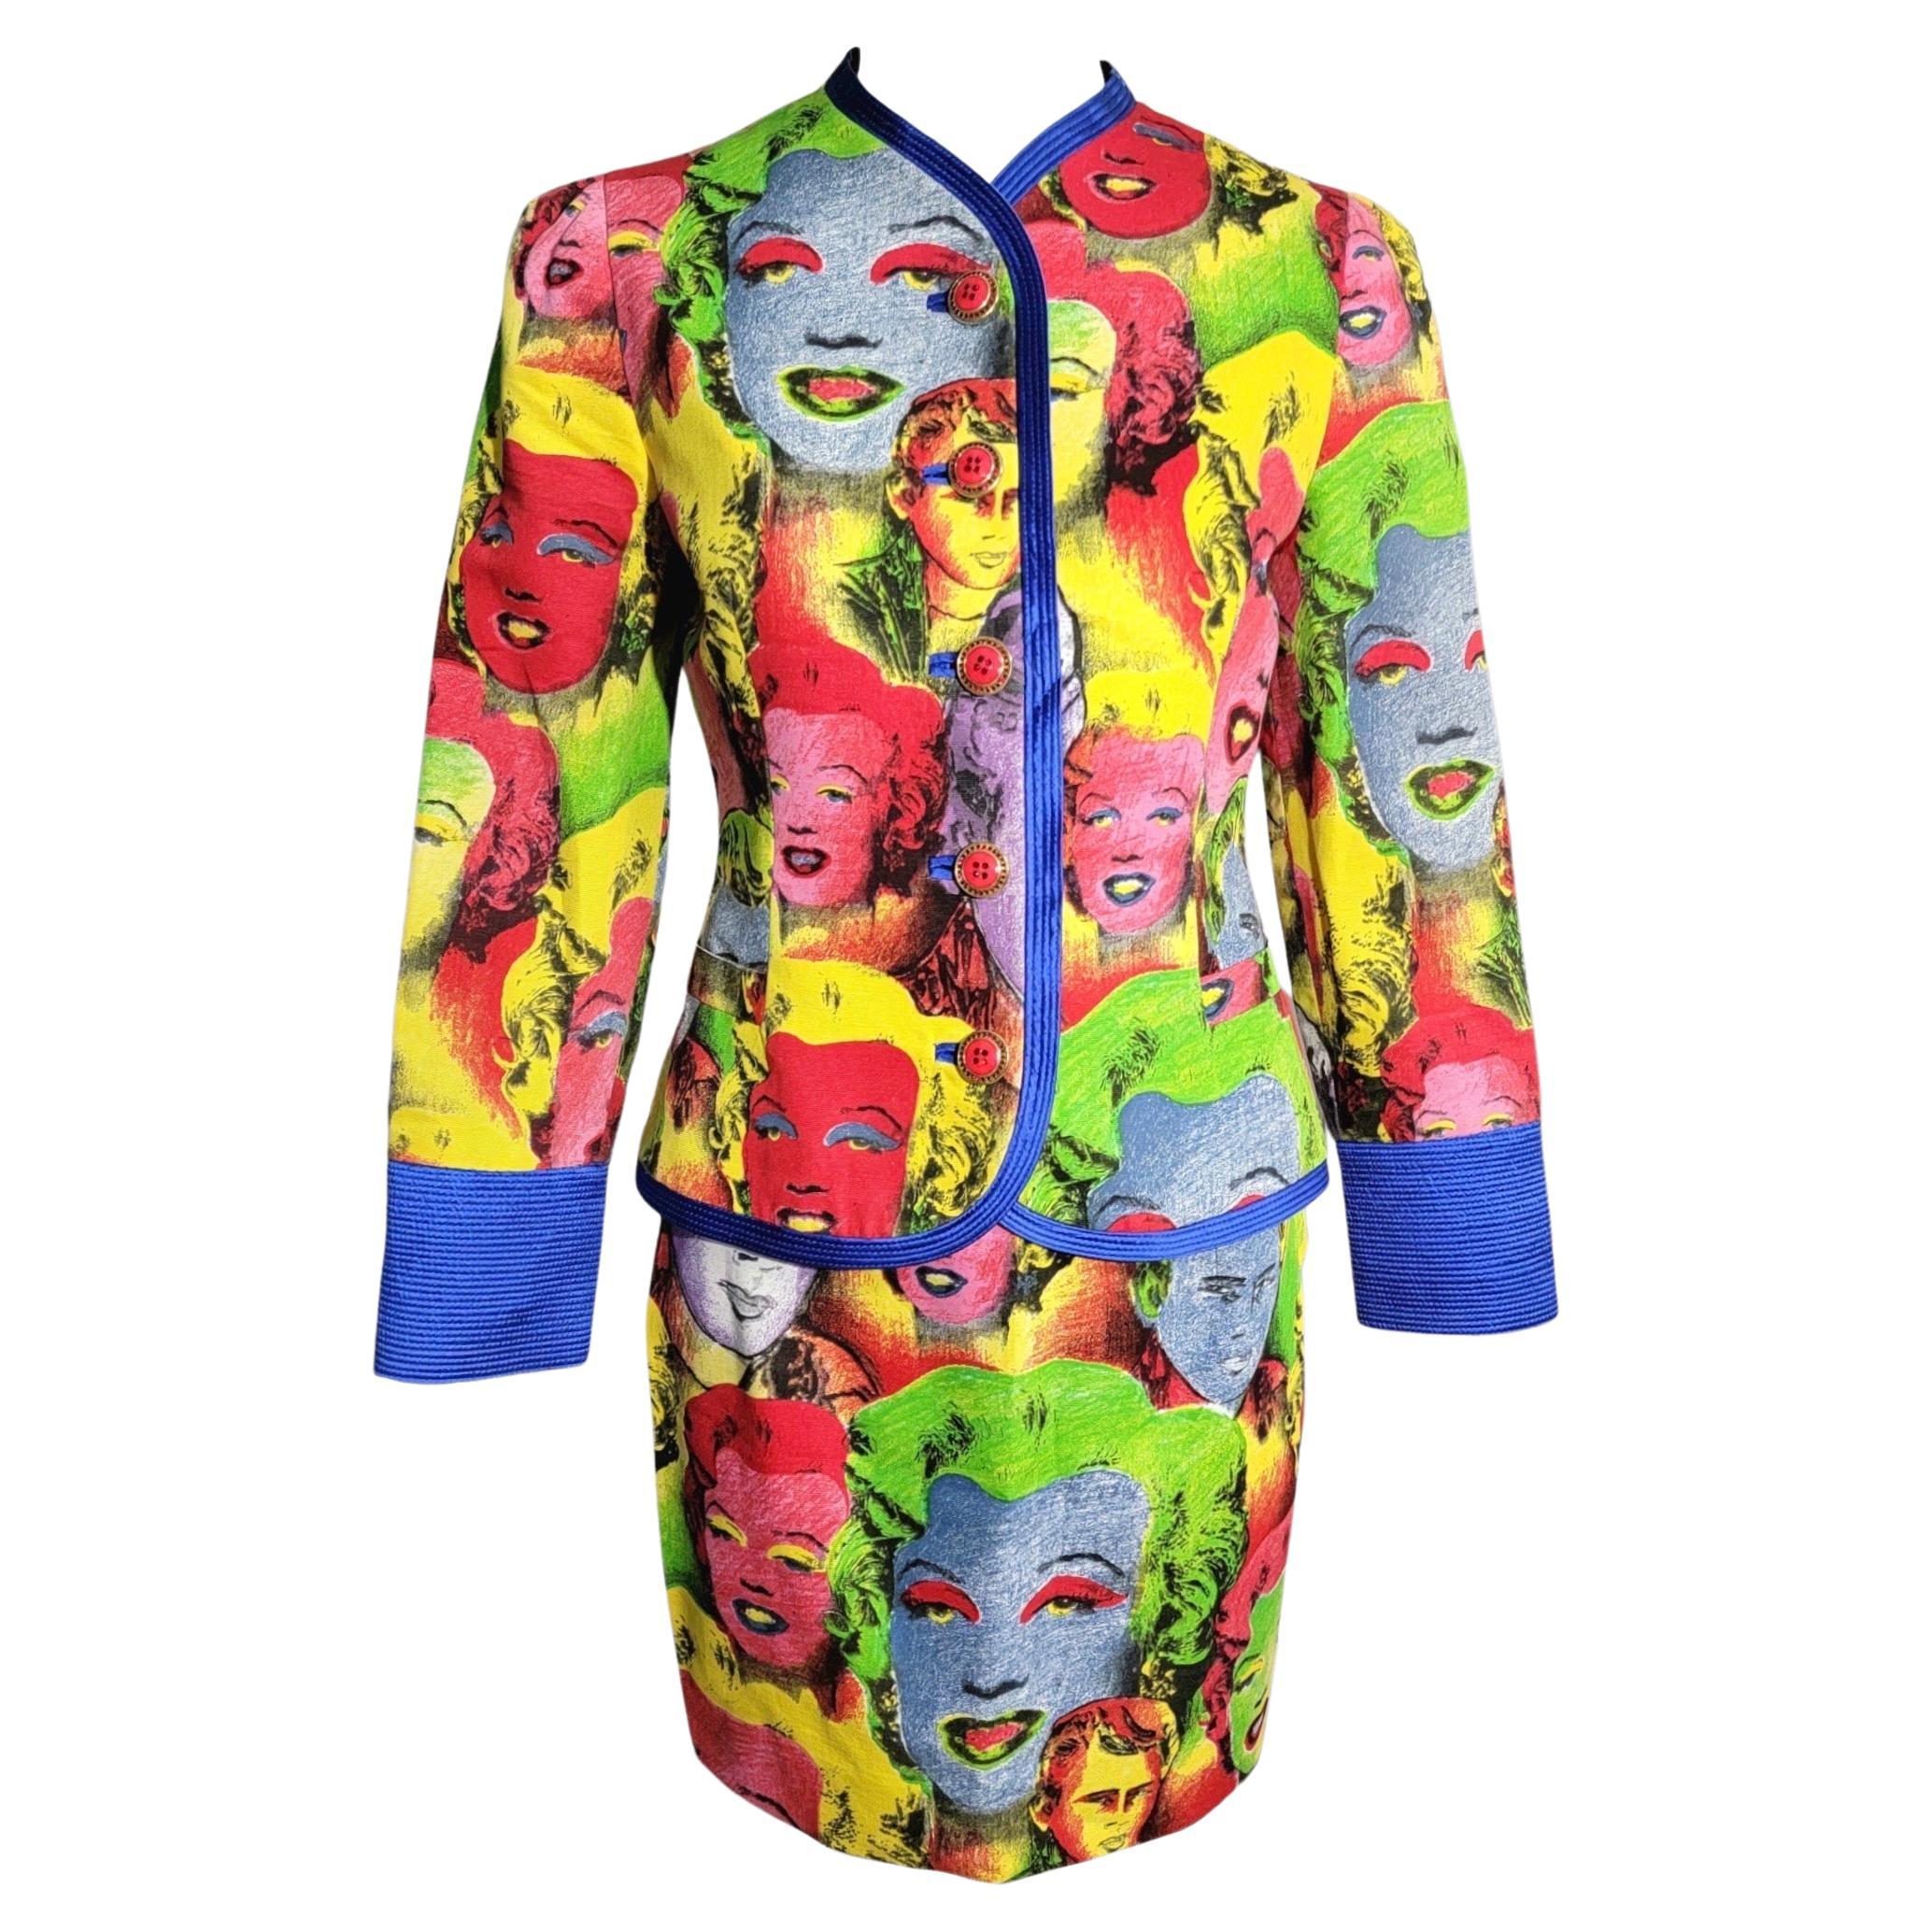  S/S 1991 Gianni Versace Marilyn Monroe Pop Art Warhol Skirt Suit For Sale